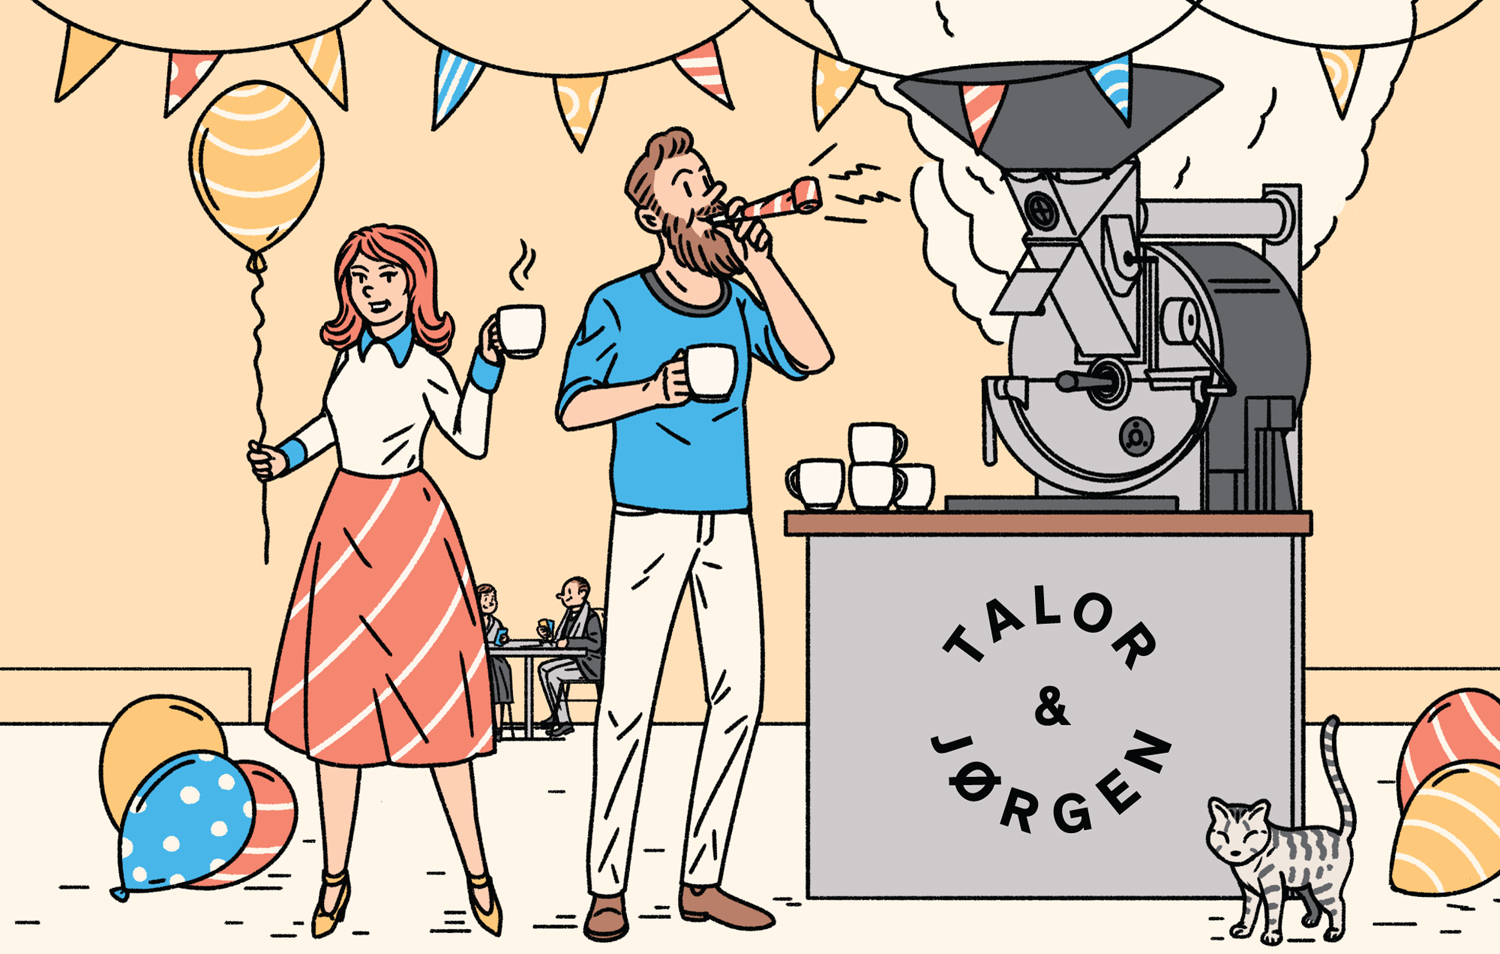 Illustration by Janne Livonen for Norwegian coffee roastery and subscription service Talor & Jørgen